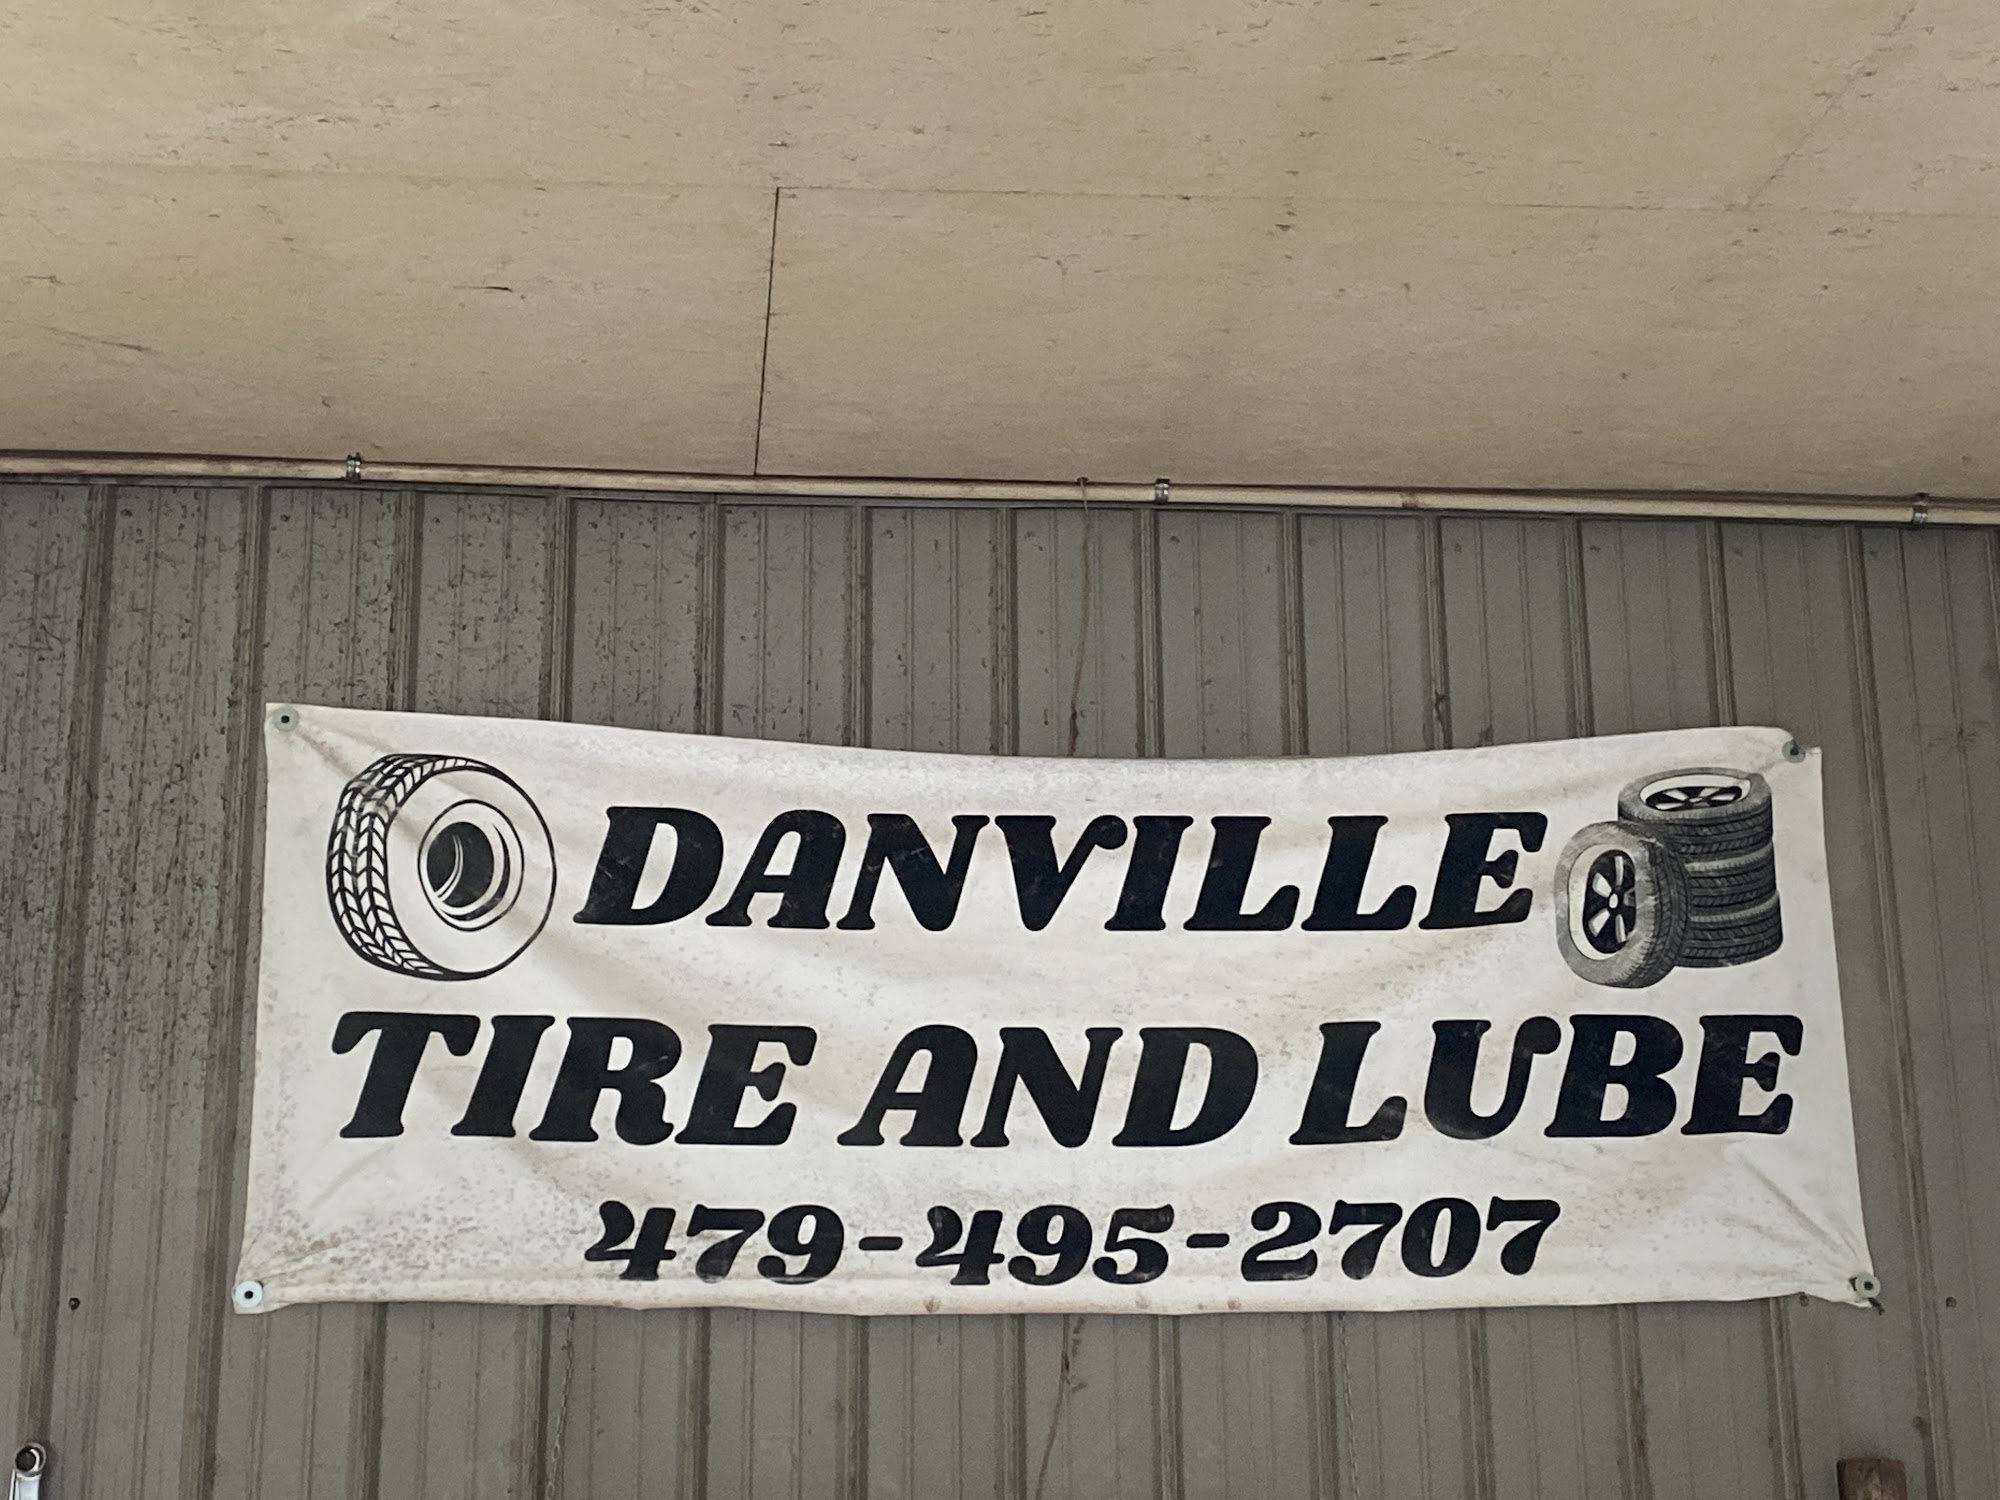 Danville Tire and Lube